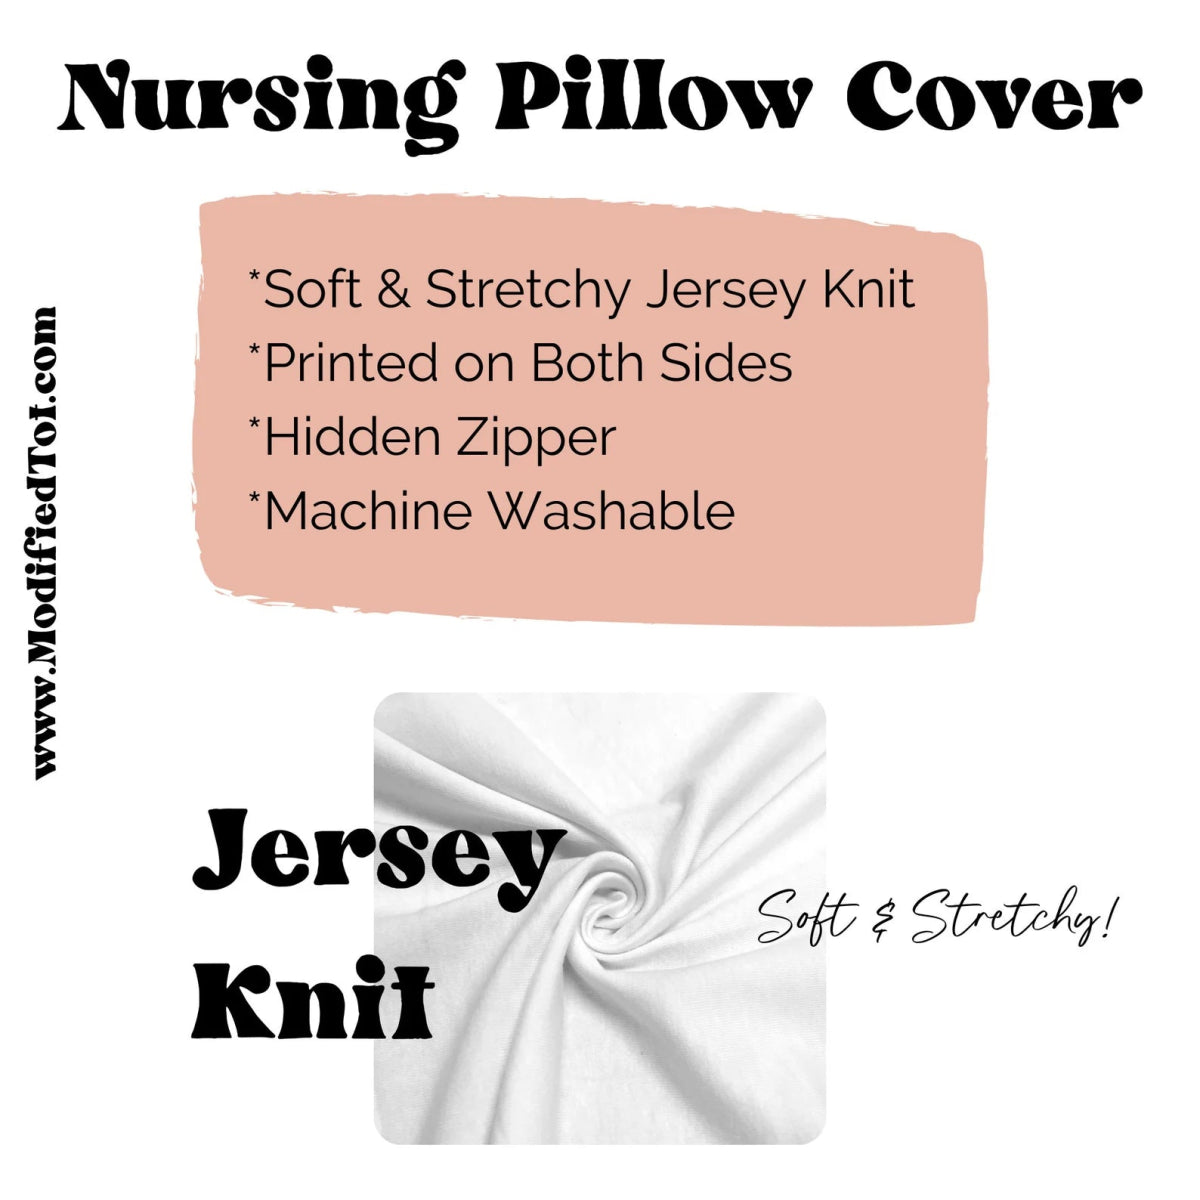 Blush Gold Floral Nursing Pillow Cover - Blush Gold Floral, gender_girl, Swan Lake